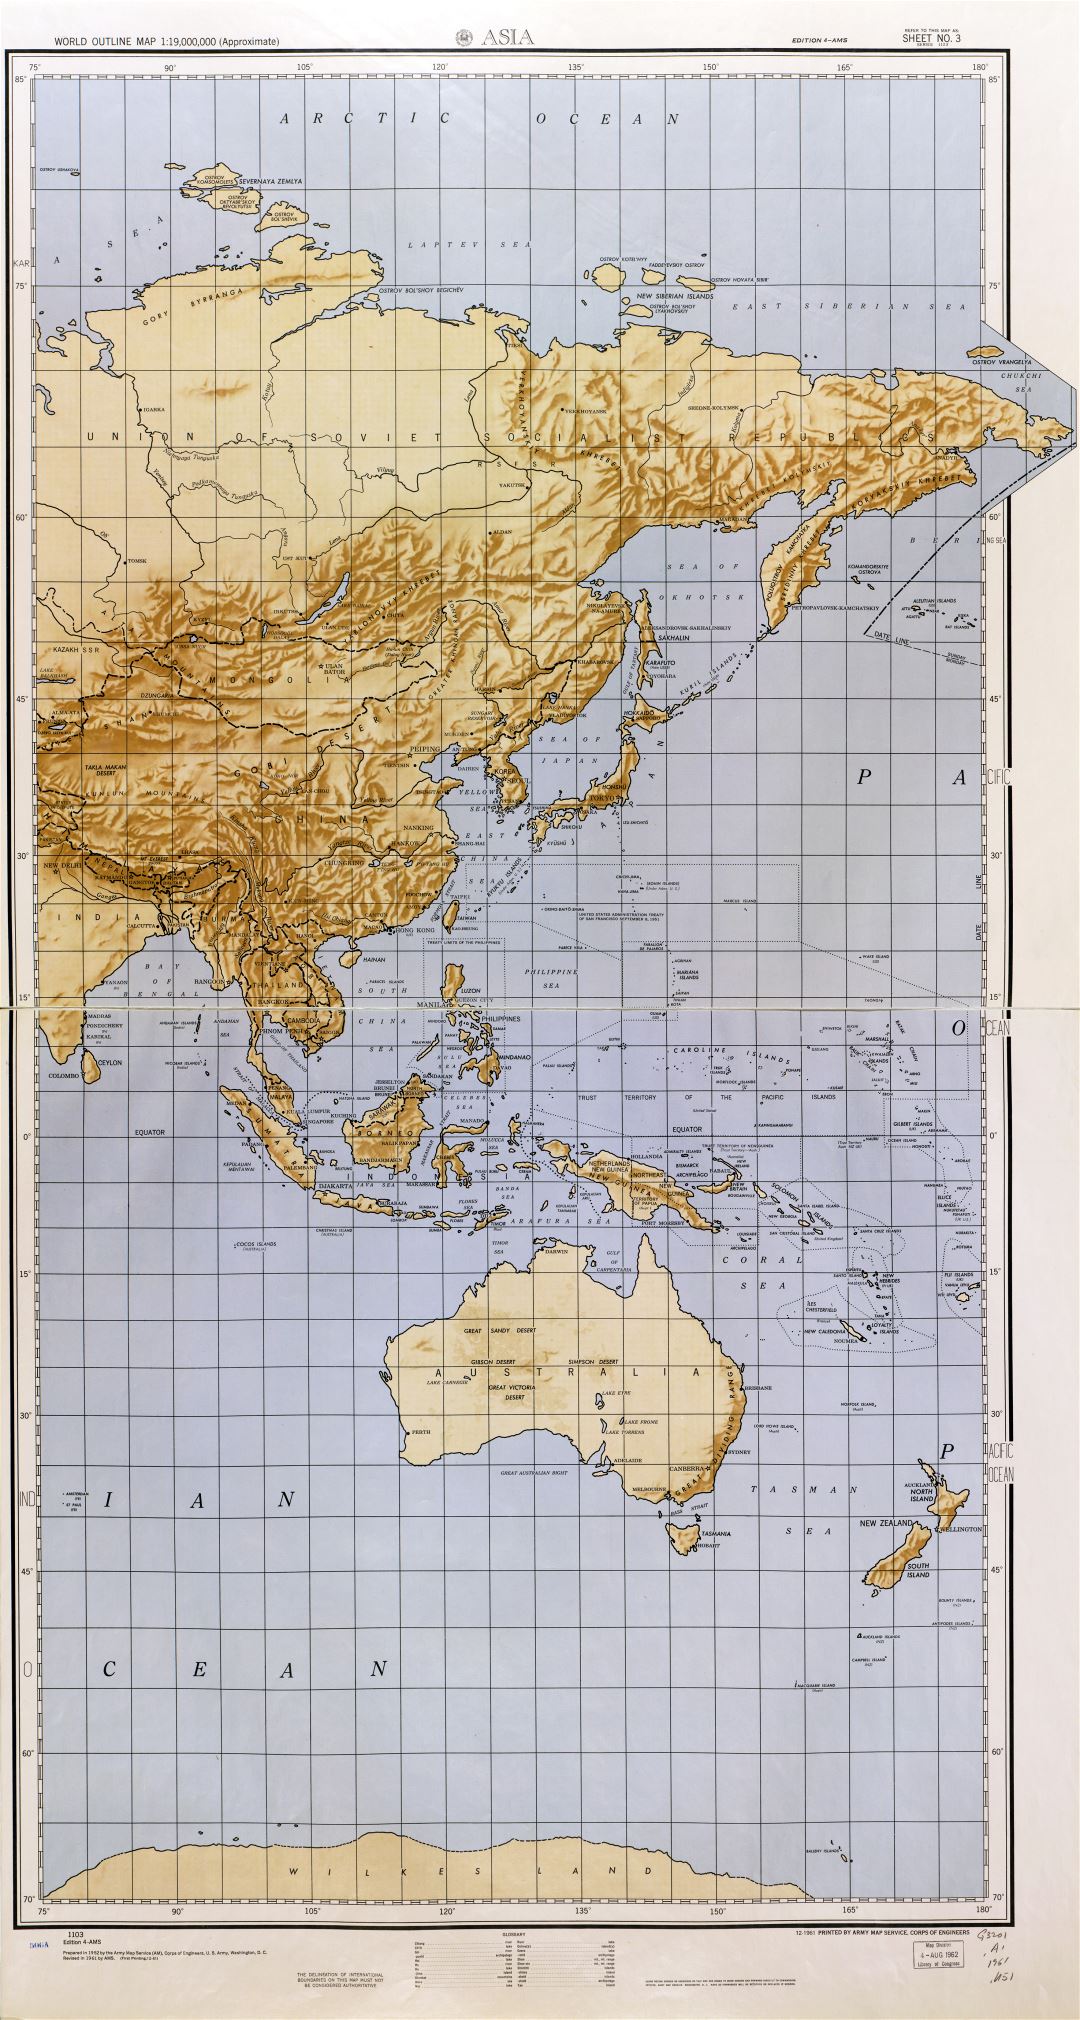 Mapa grande del contorno del mundo detallada con alivio - parte 3 (Asia) 1961-1962